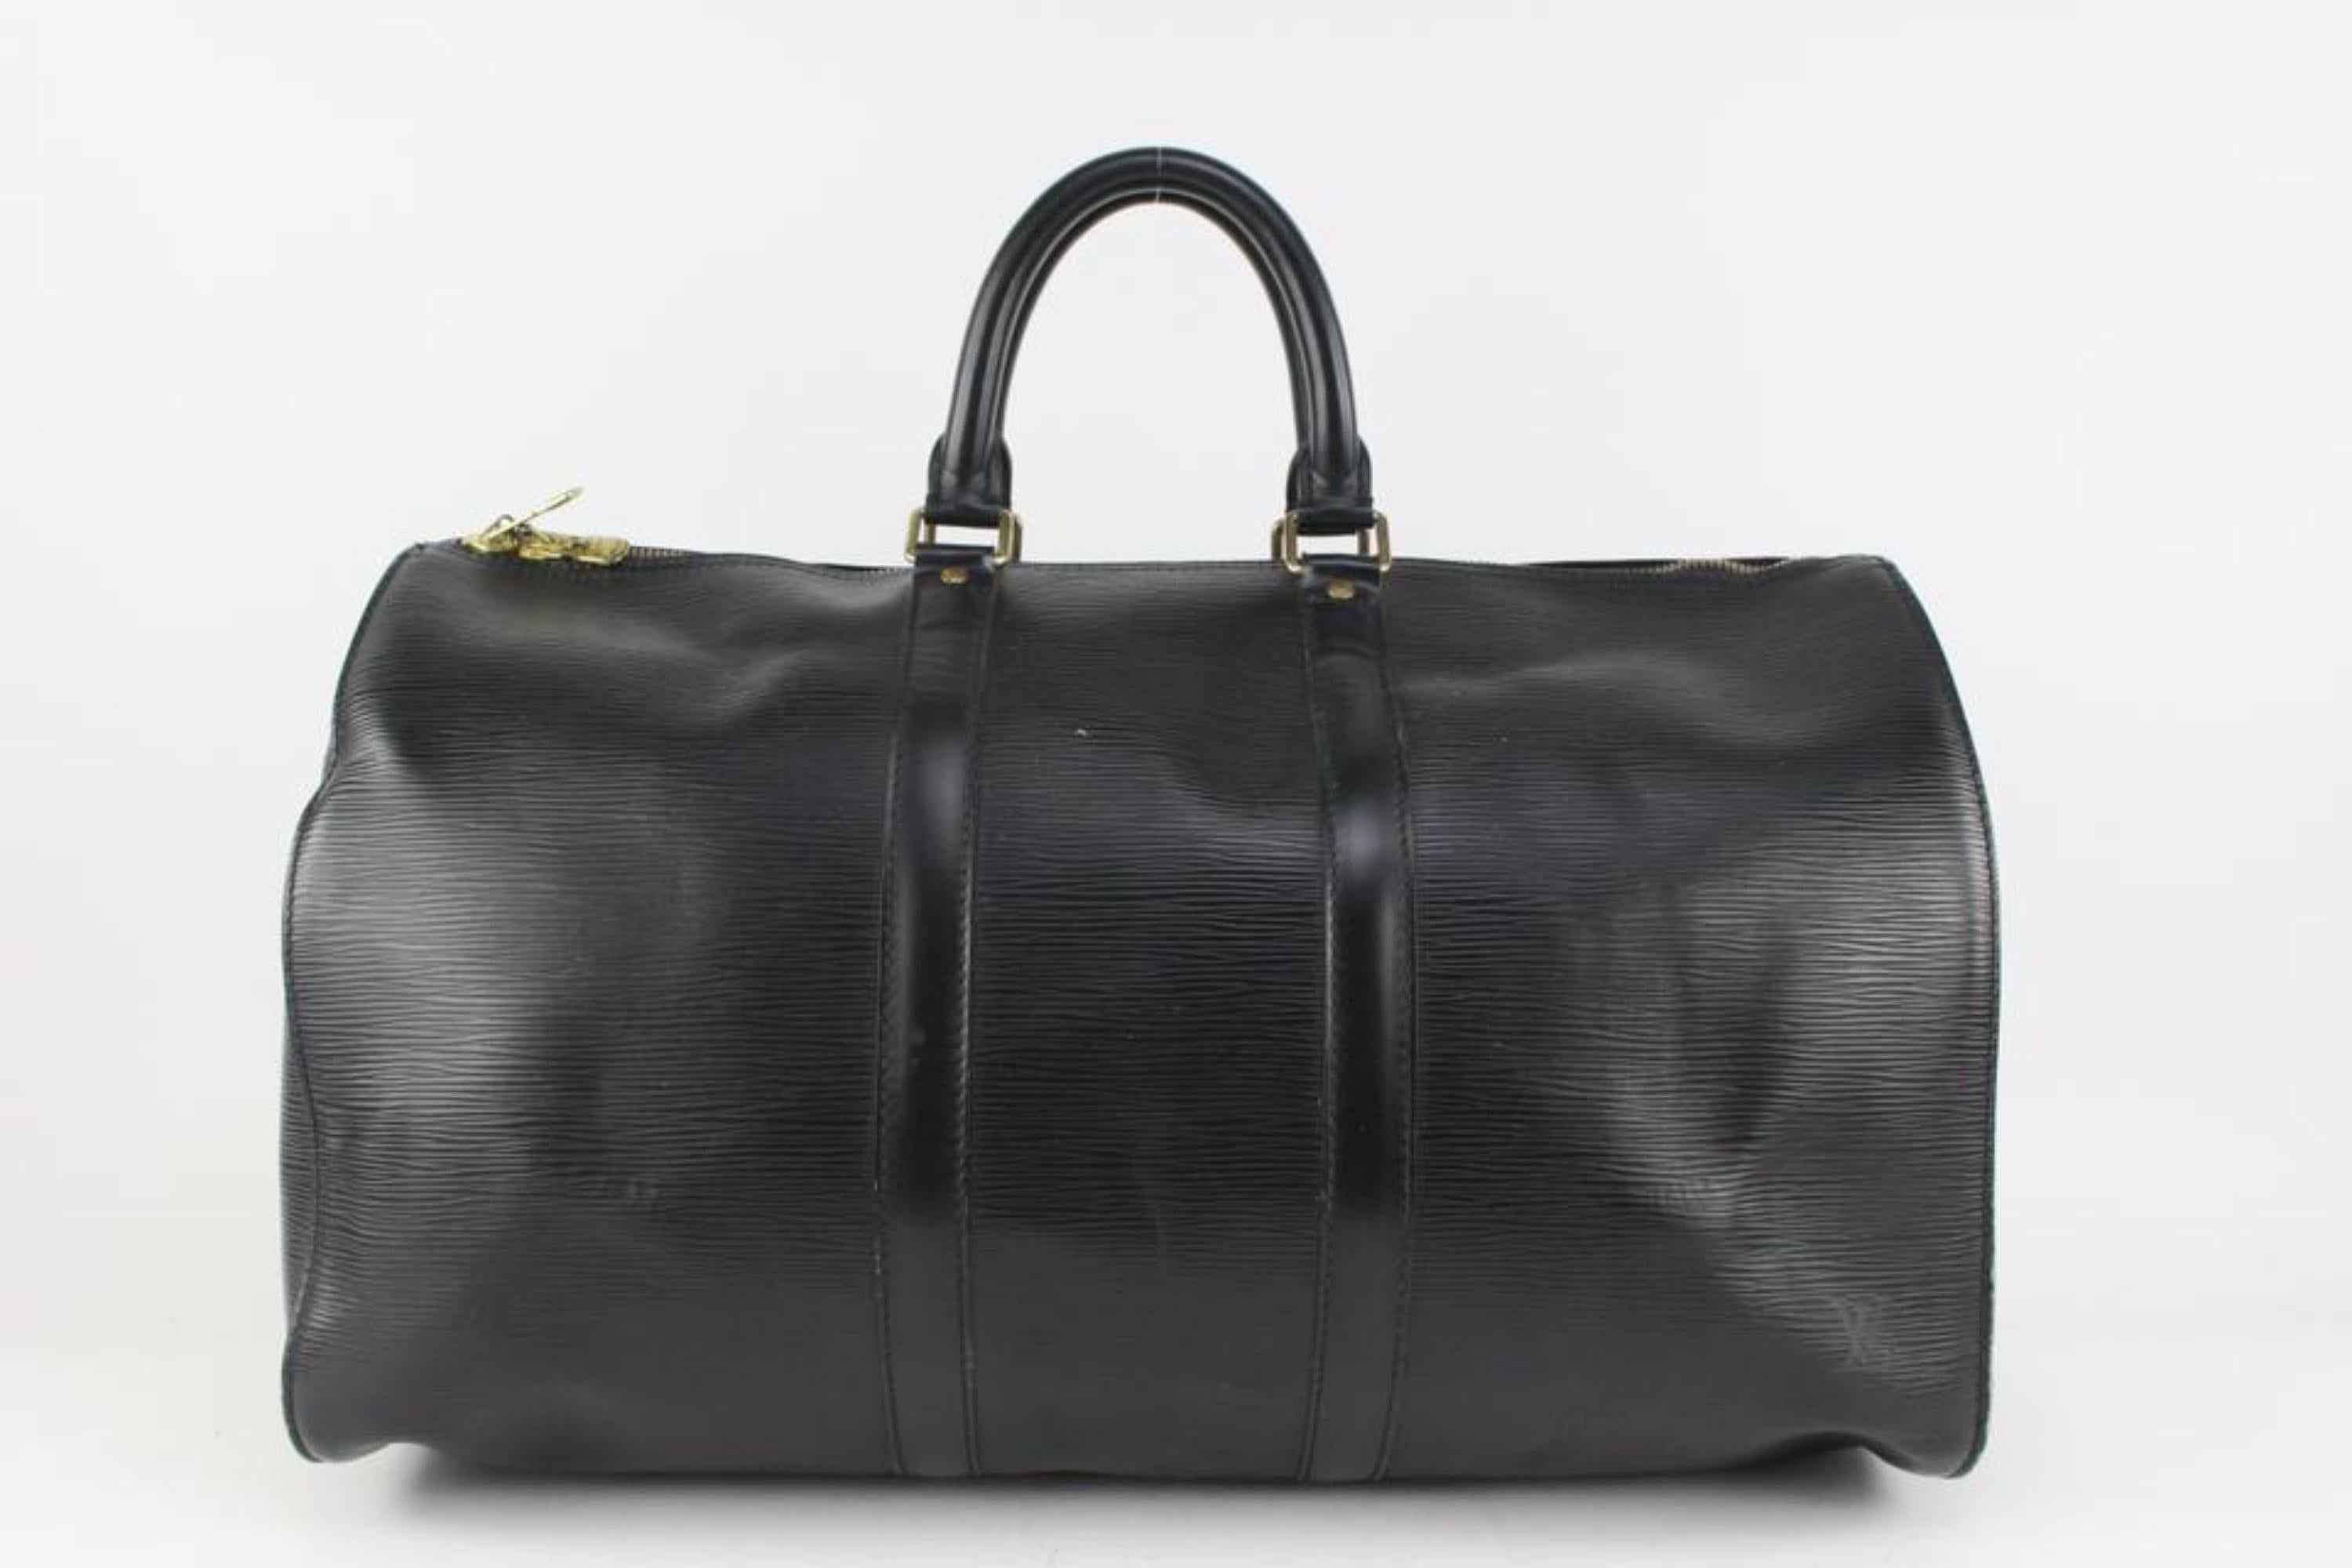 Louis Vuitton Black Epi Leather Noir Keepall 45 Duffle Bag 1118lv31 1